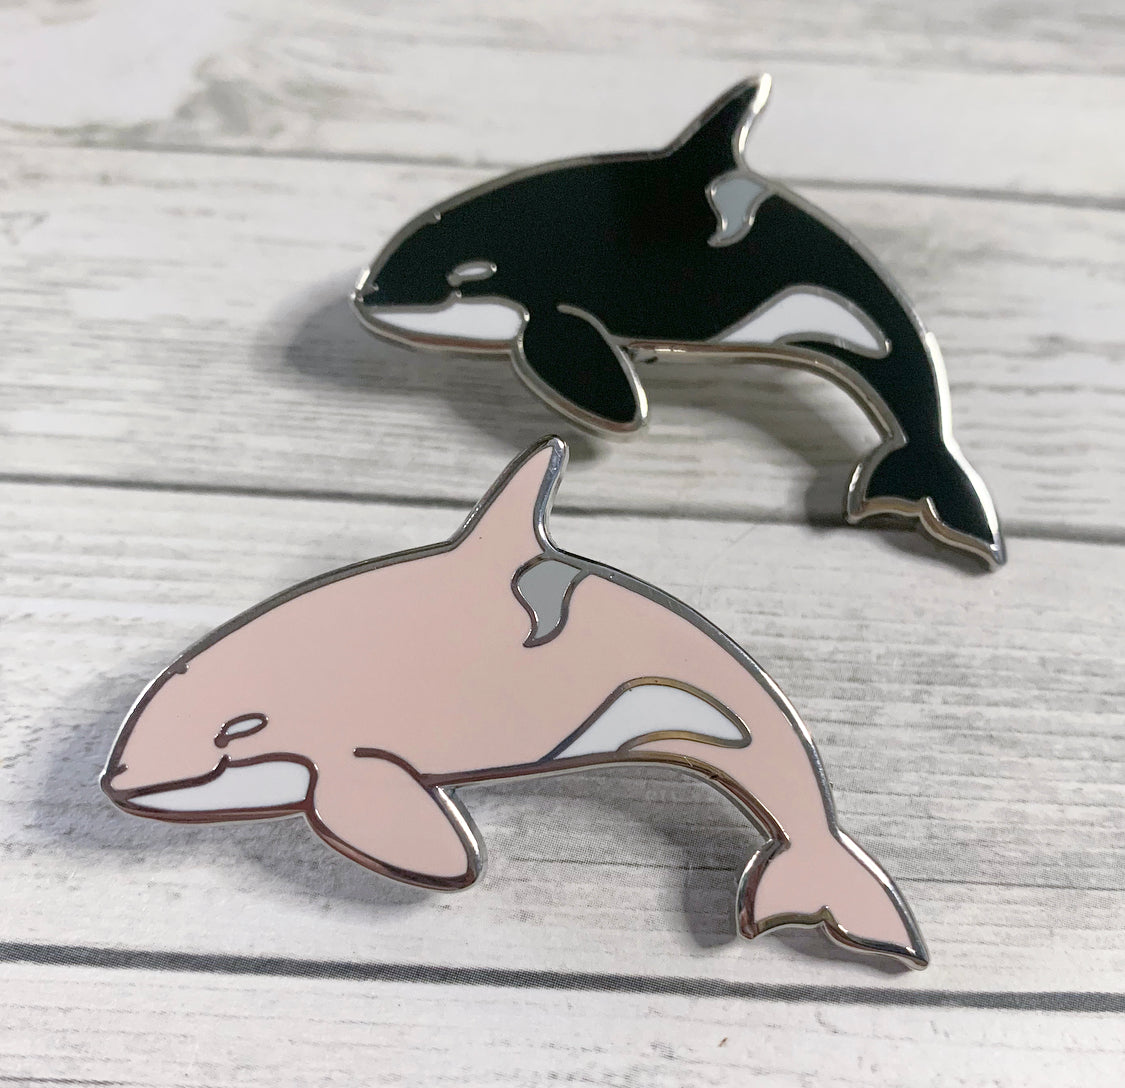 type d orca cetacean • donation pin set of 2 pins! (black & pink)